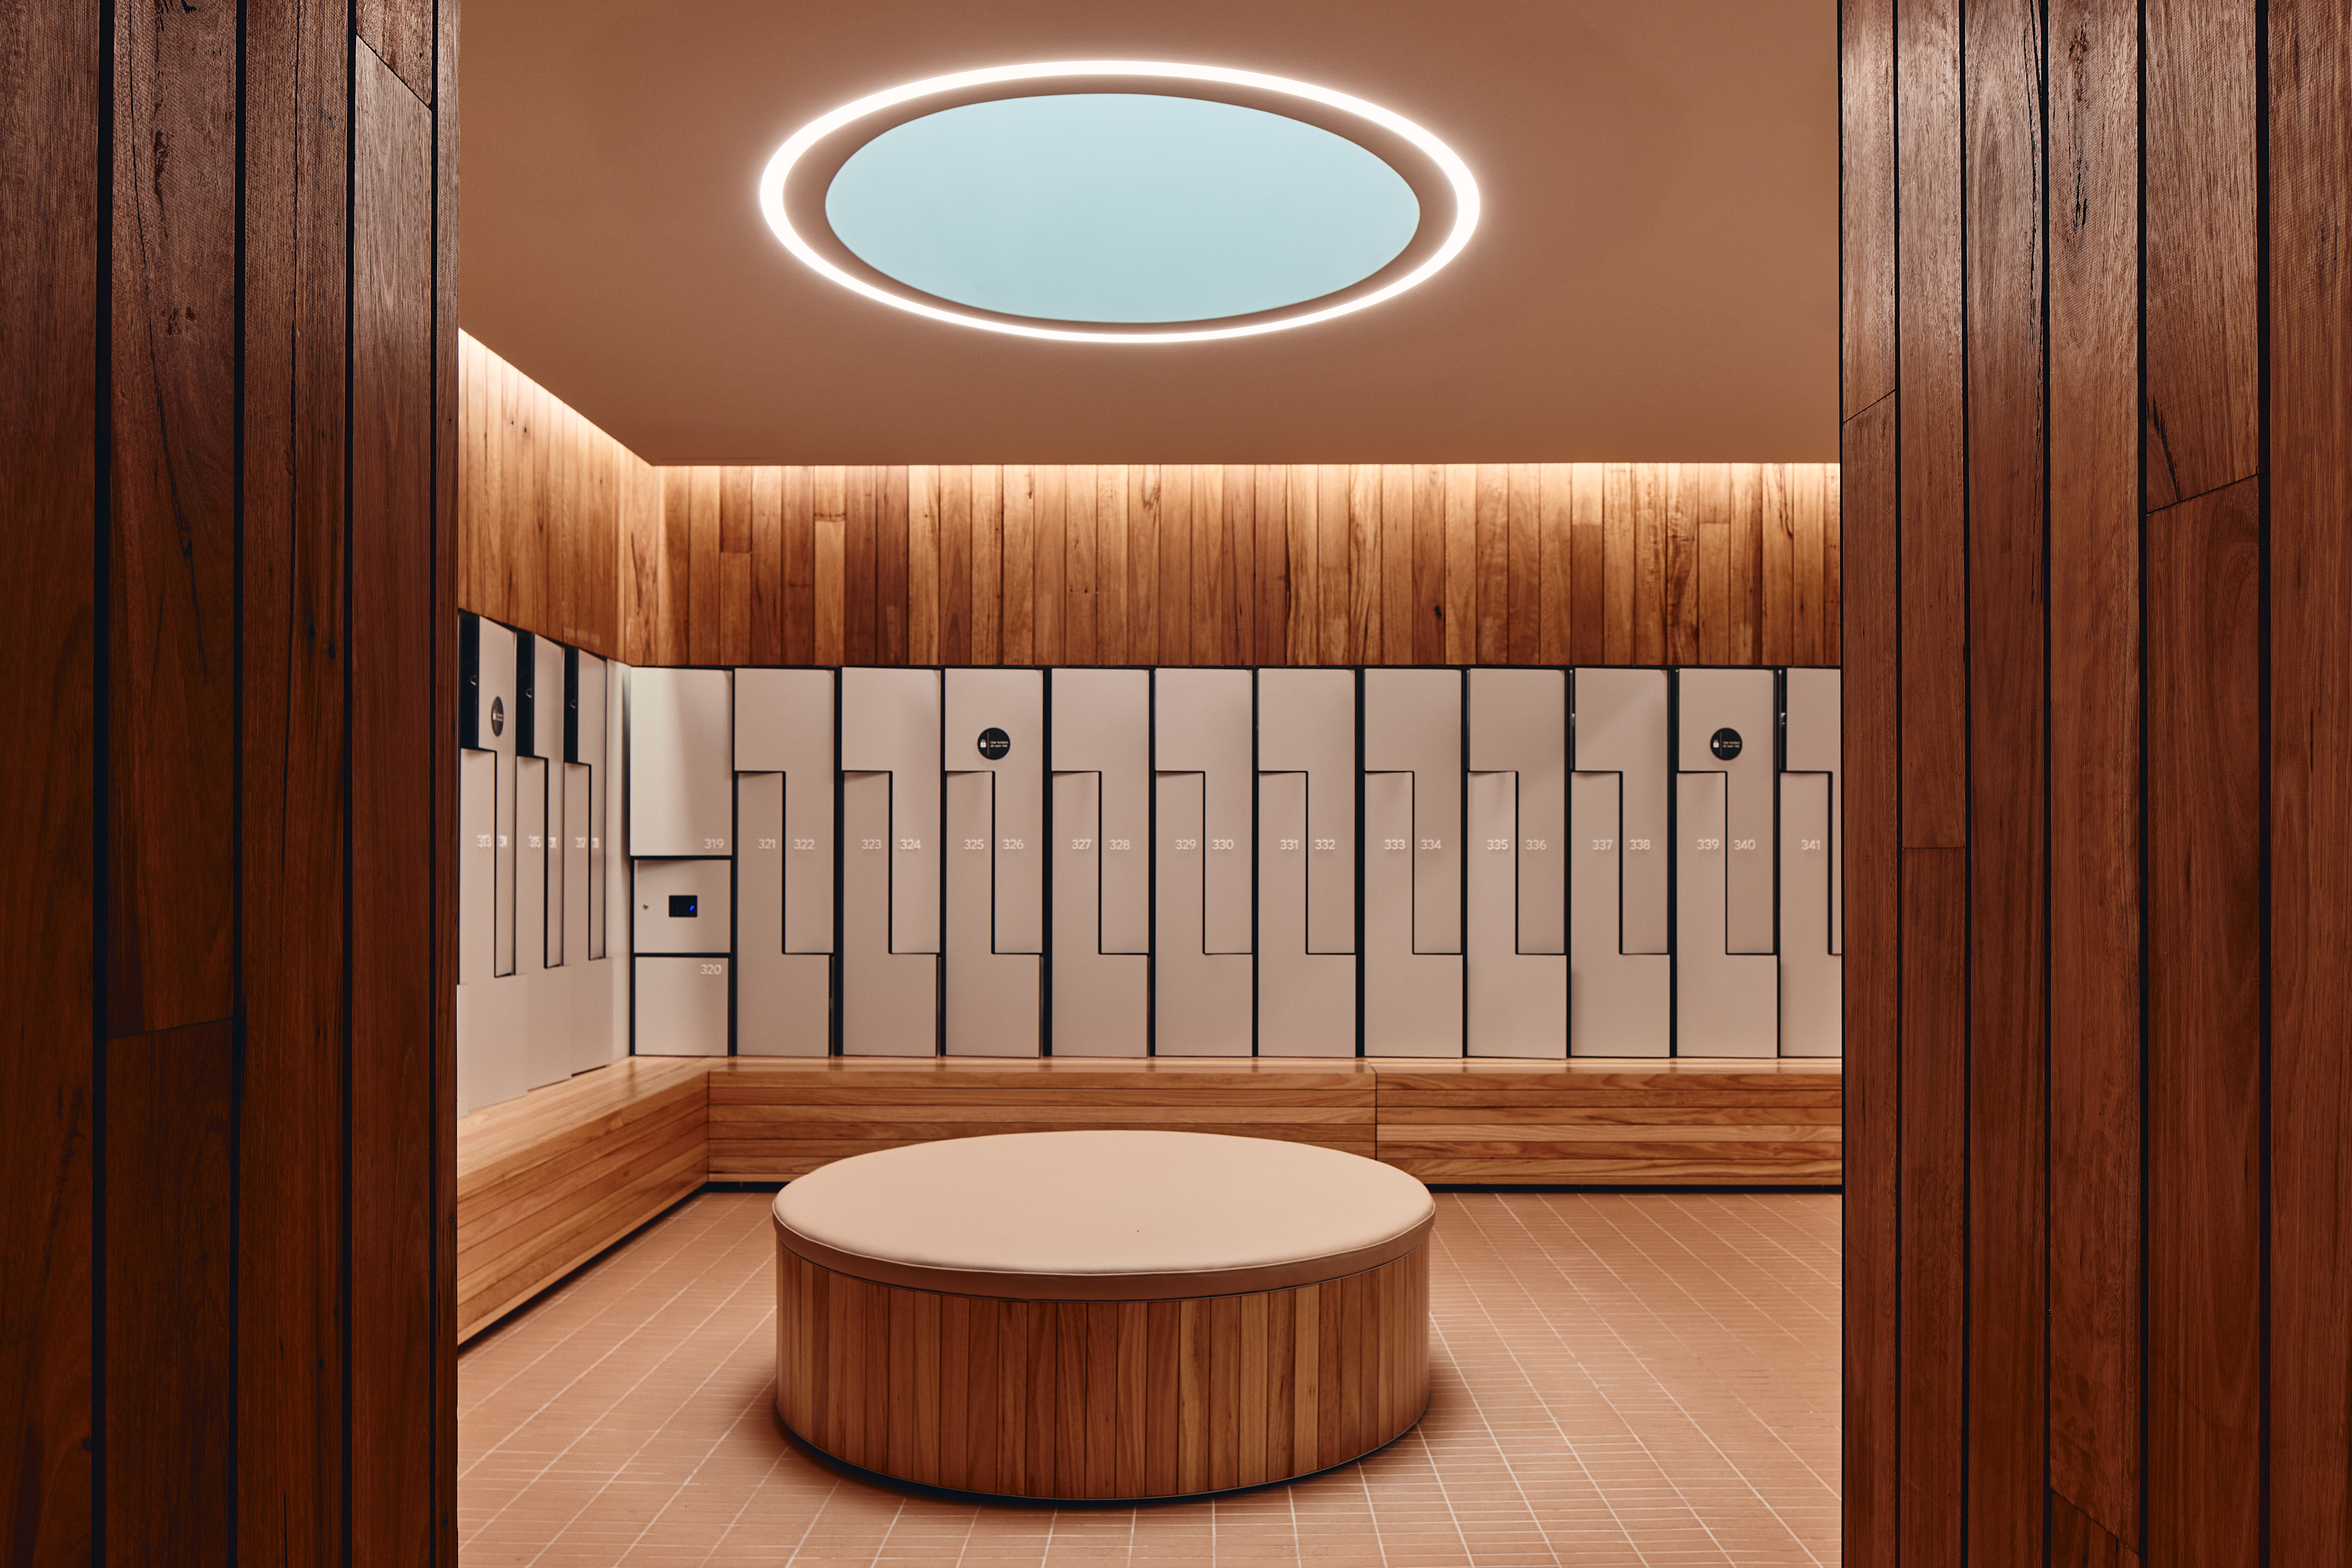 Parramatta Aquatic Centre interior wood-lined space